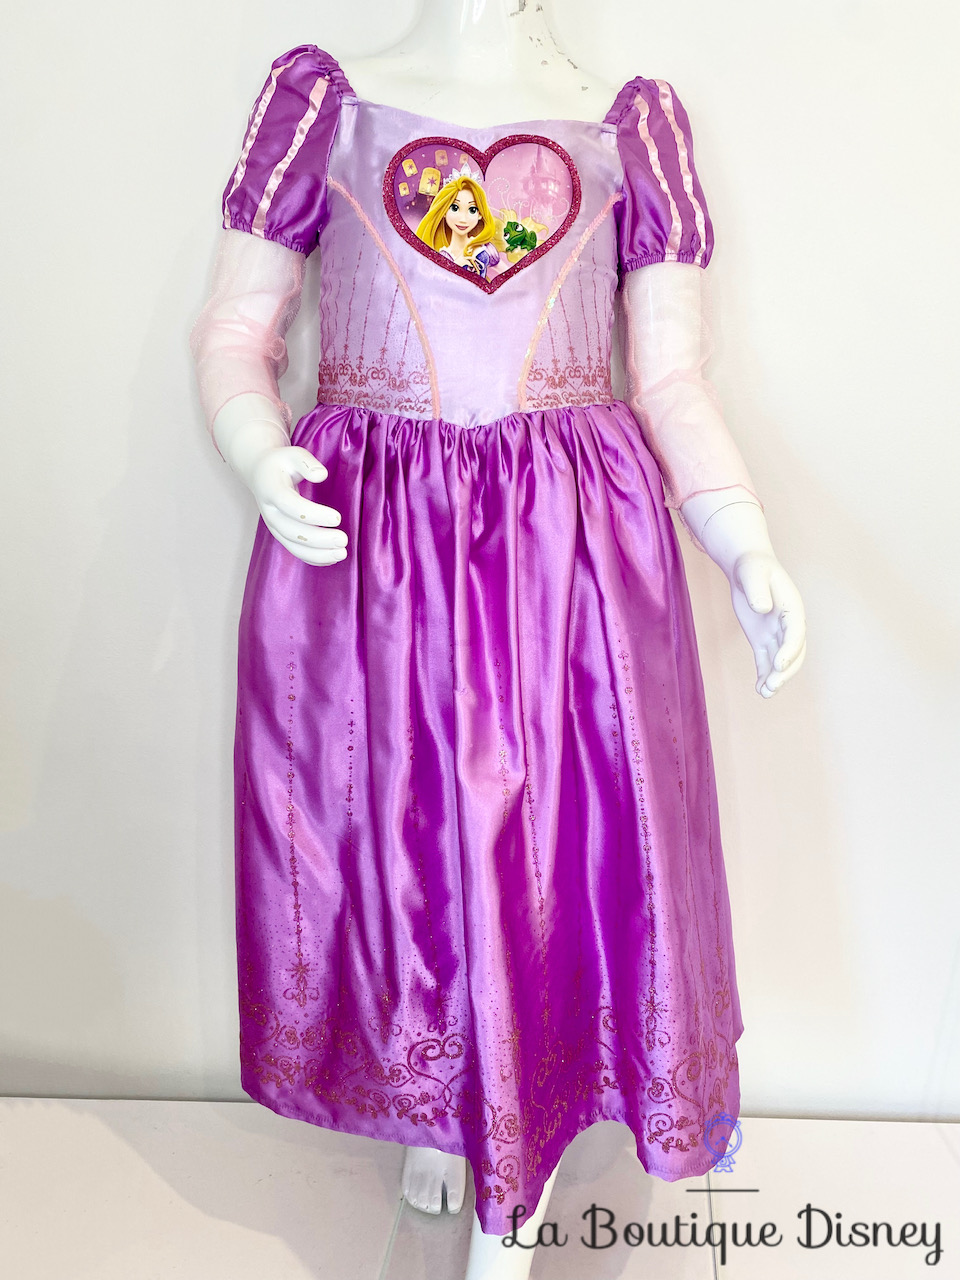 Déguisement Raiponce Disney Rubies Costume taille 7-8 ans robe princesse violette Pascal coeur